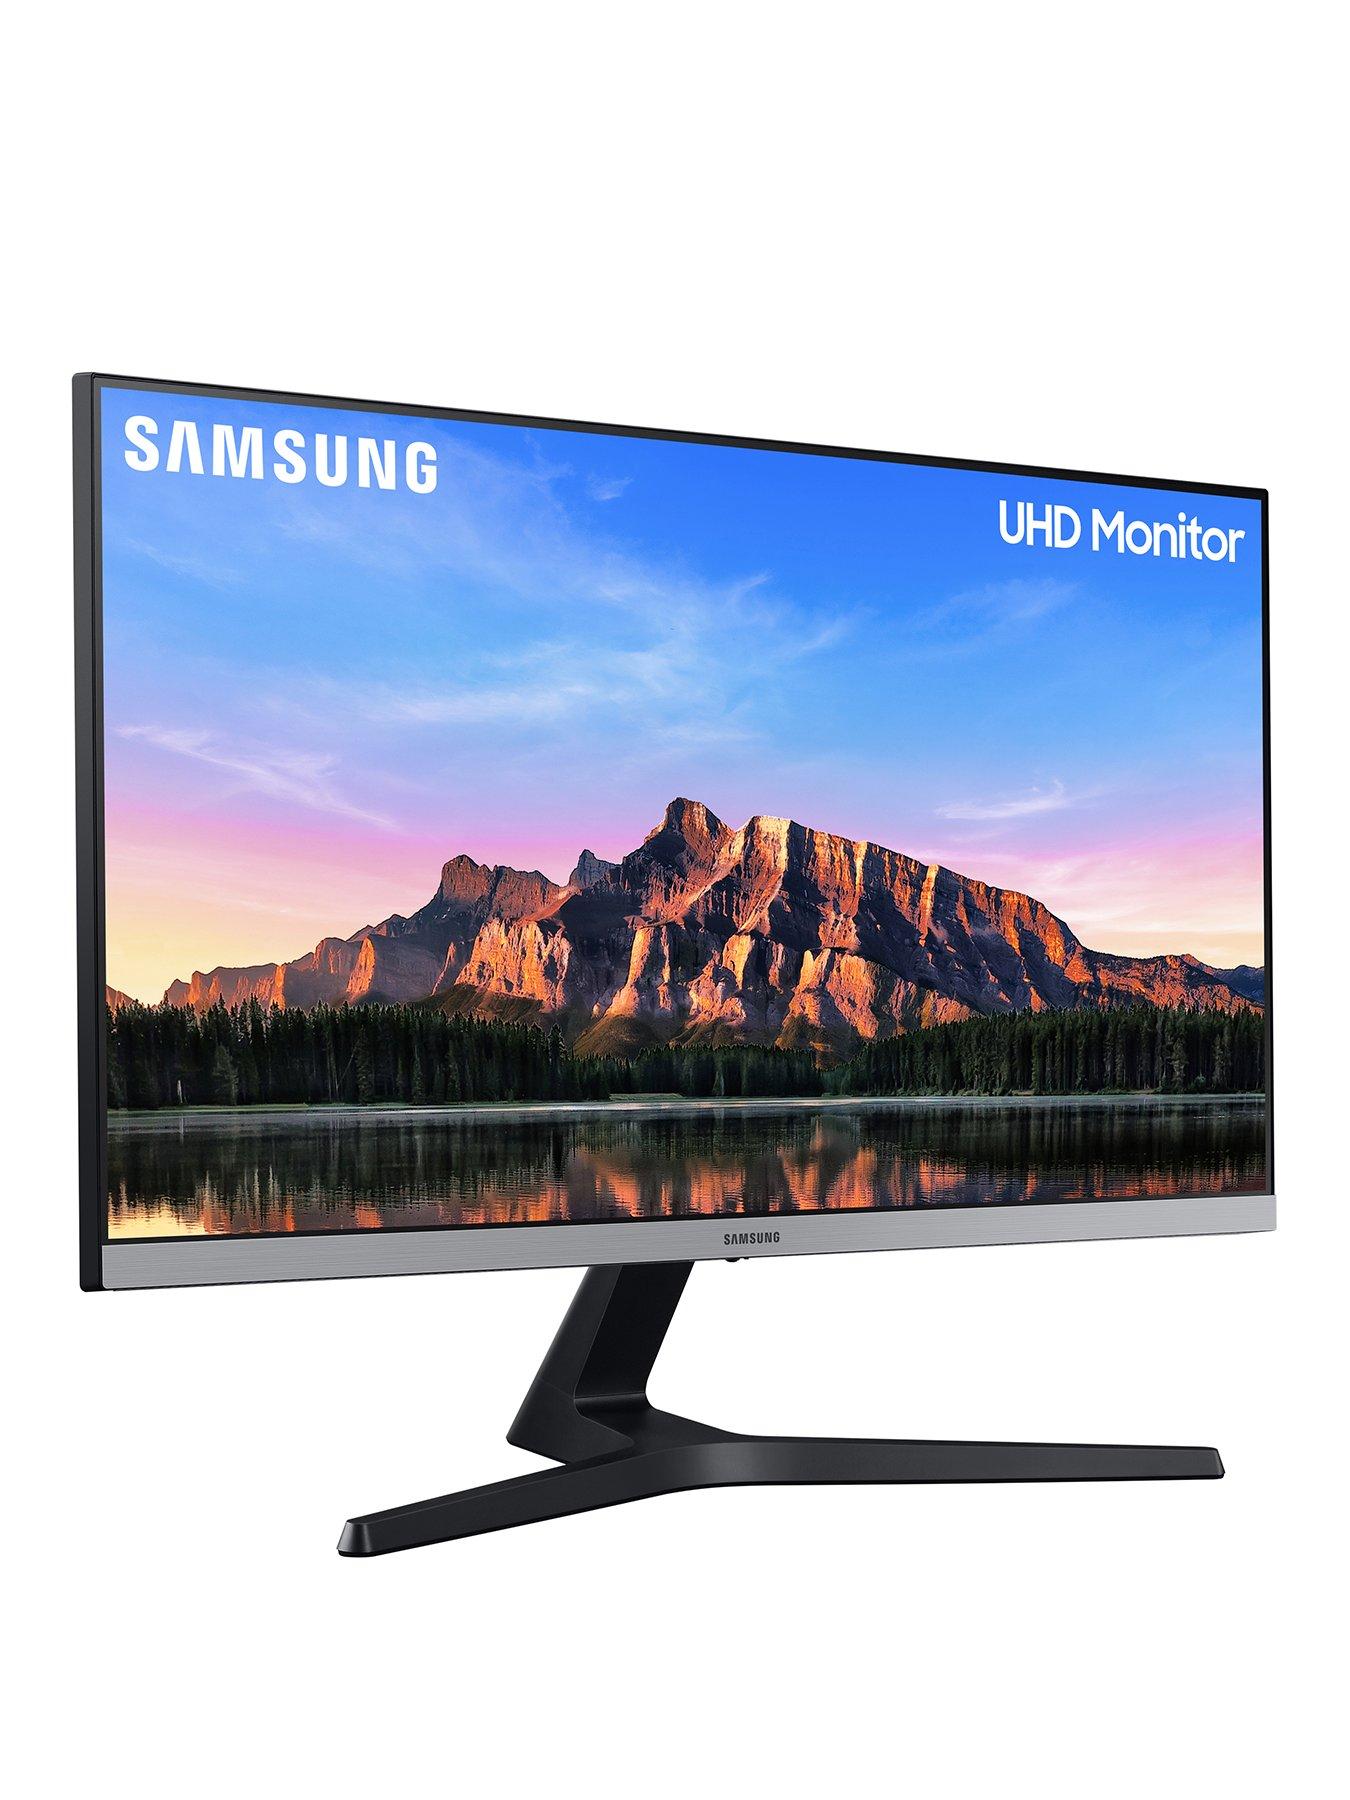 Samsung UR550 28-inch Ultra HD 4K High Resolution Monitor